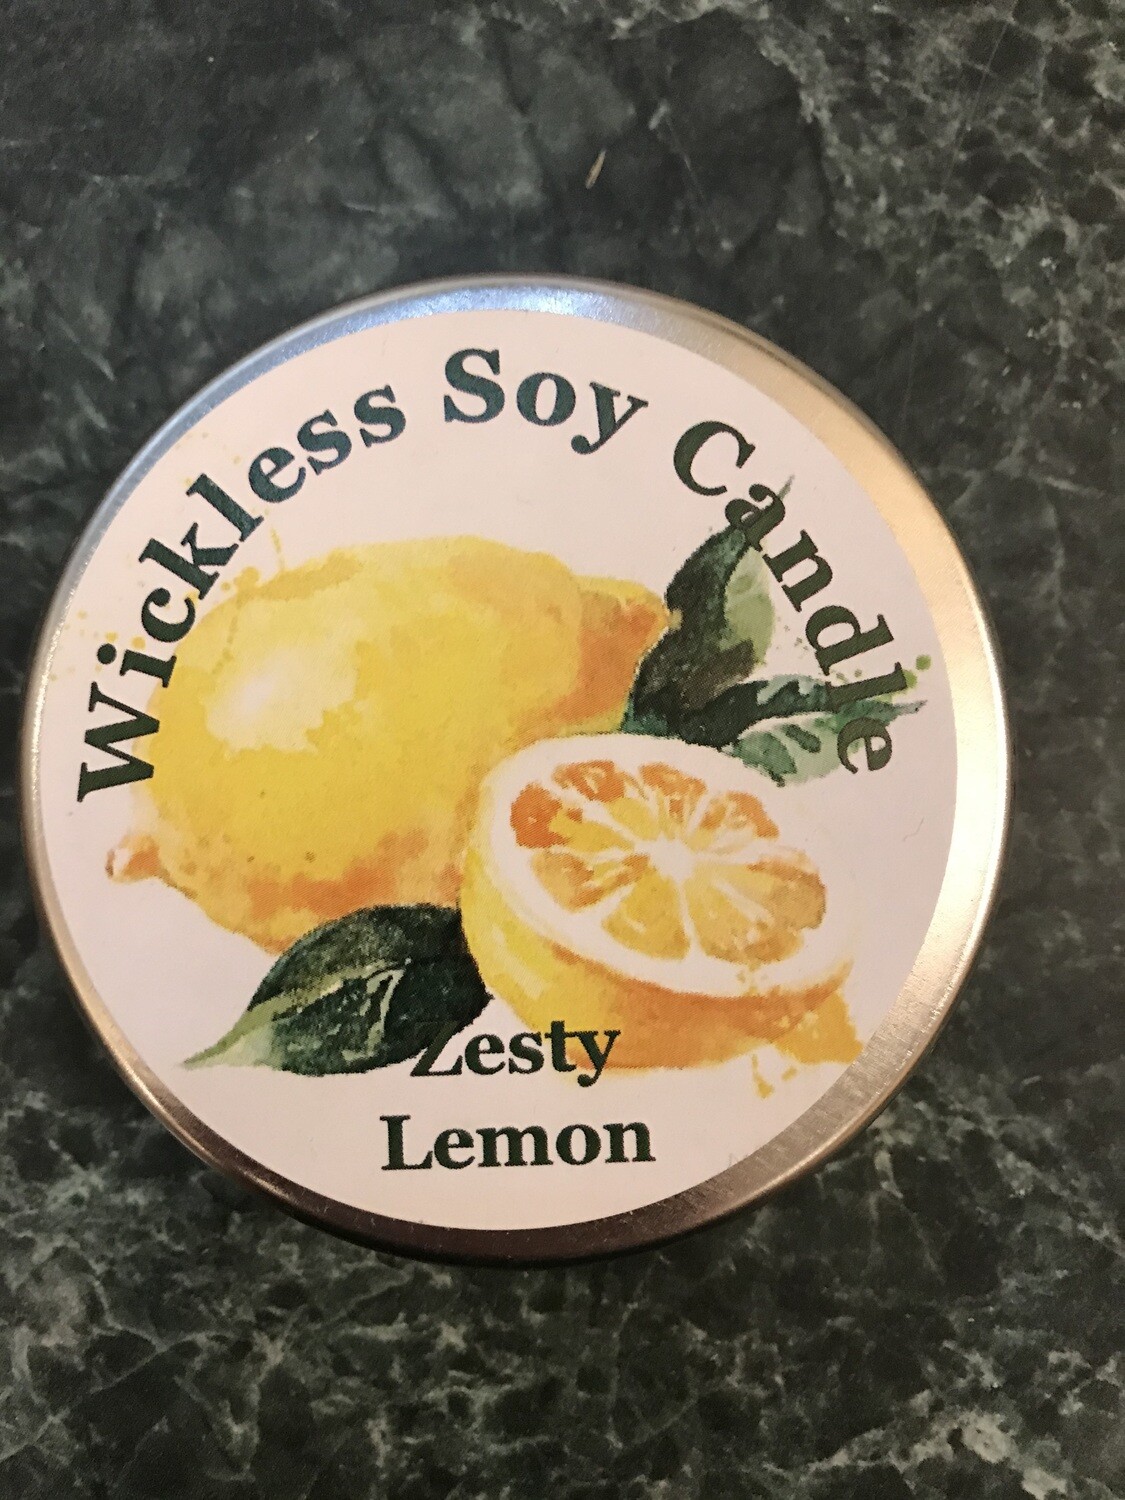 Zesty Lemon Wickless Soy Candle